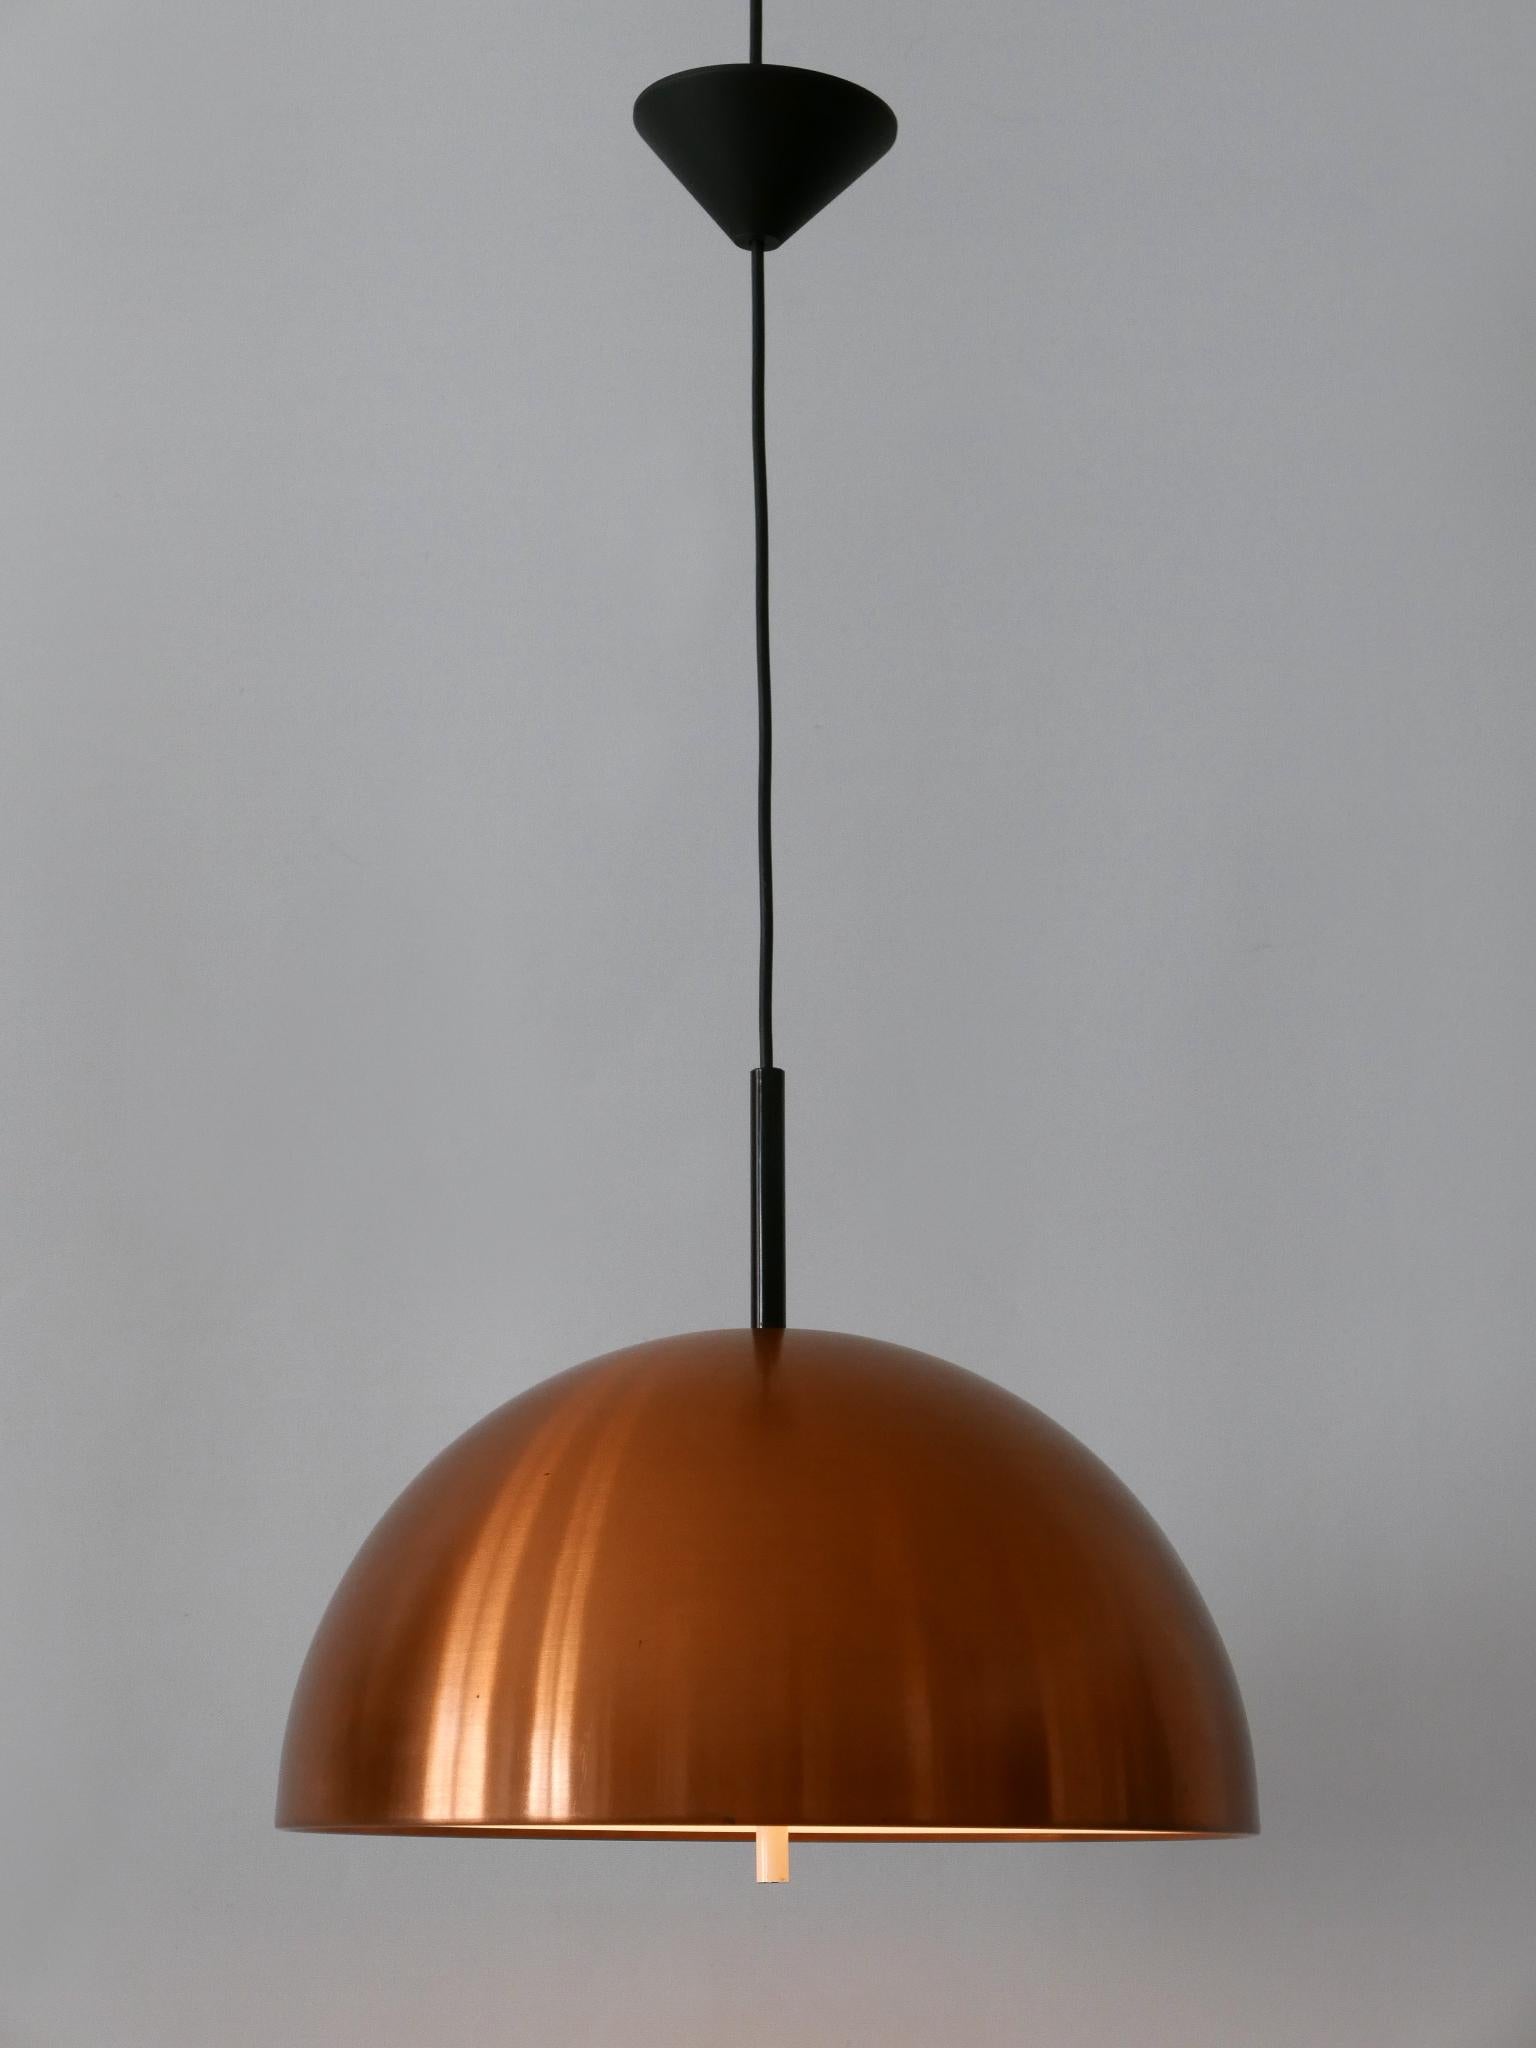 Elegant Mid-Century Modern Copper Pendant Lamp by Staff & Schwarz Germany 1960s For Sale 5